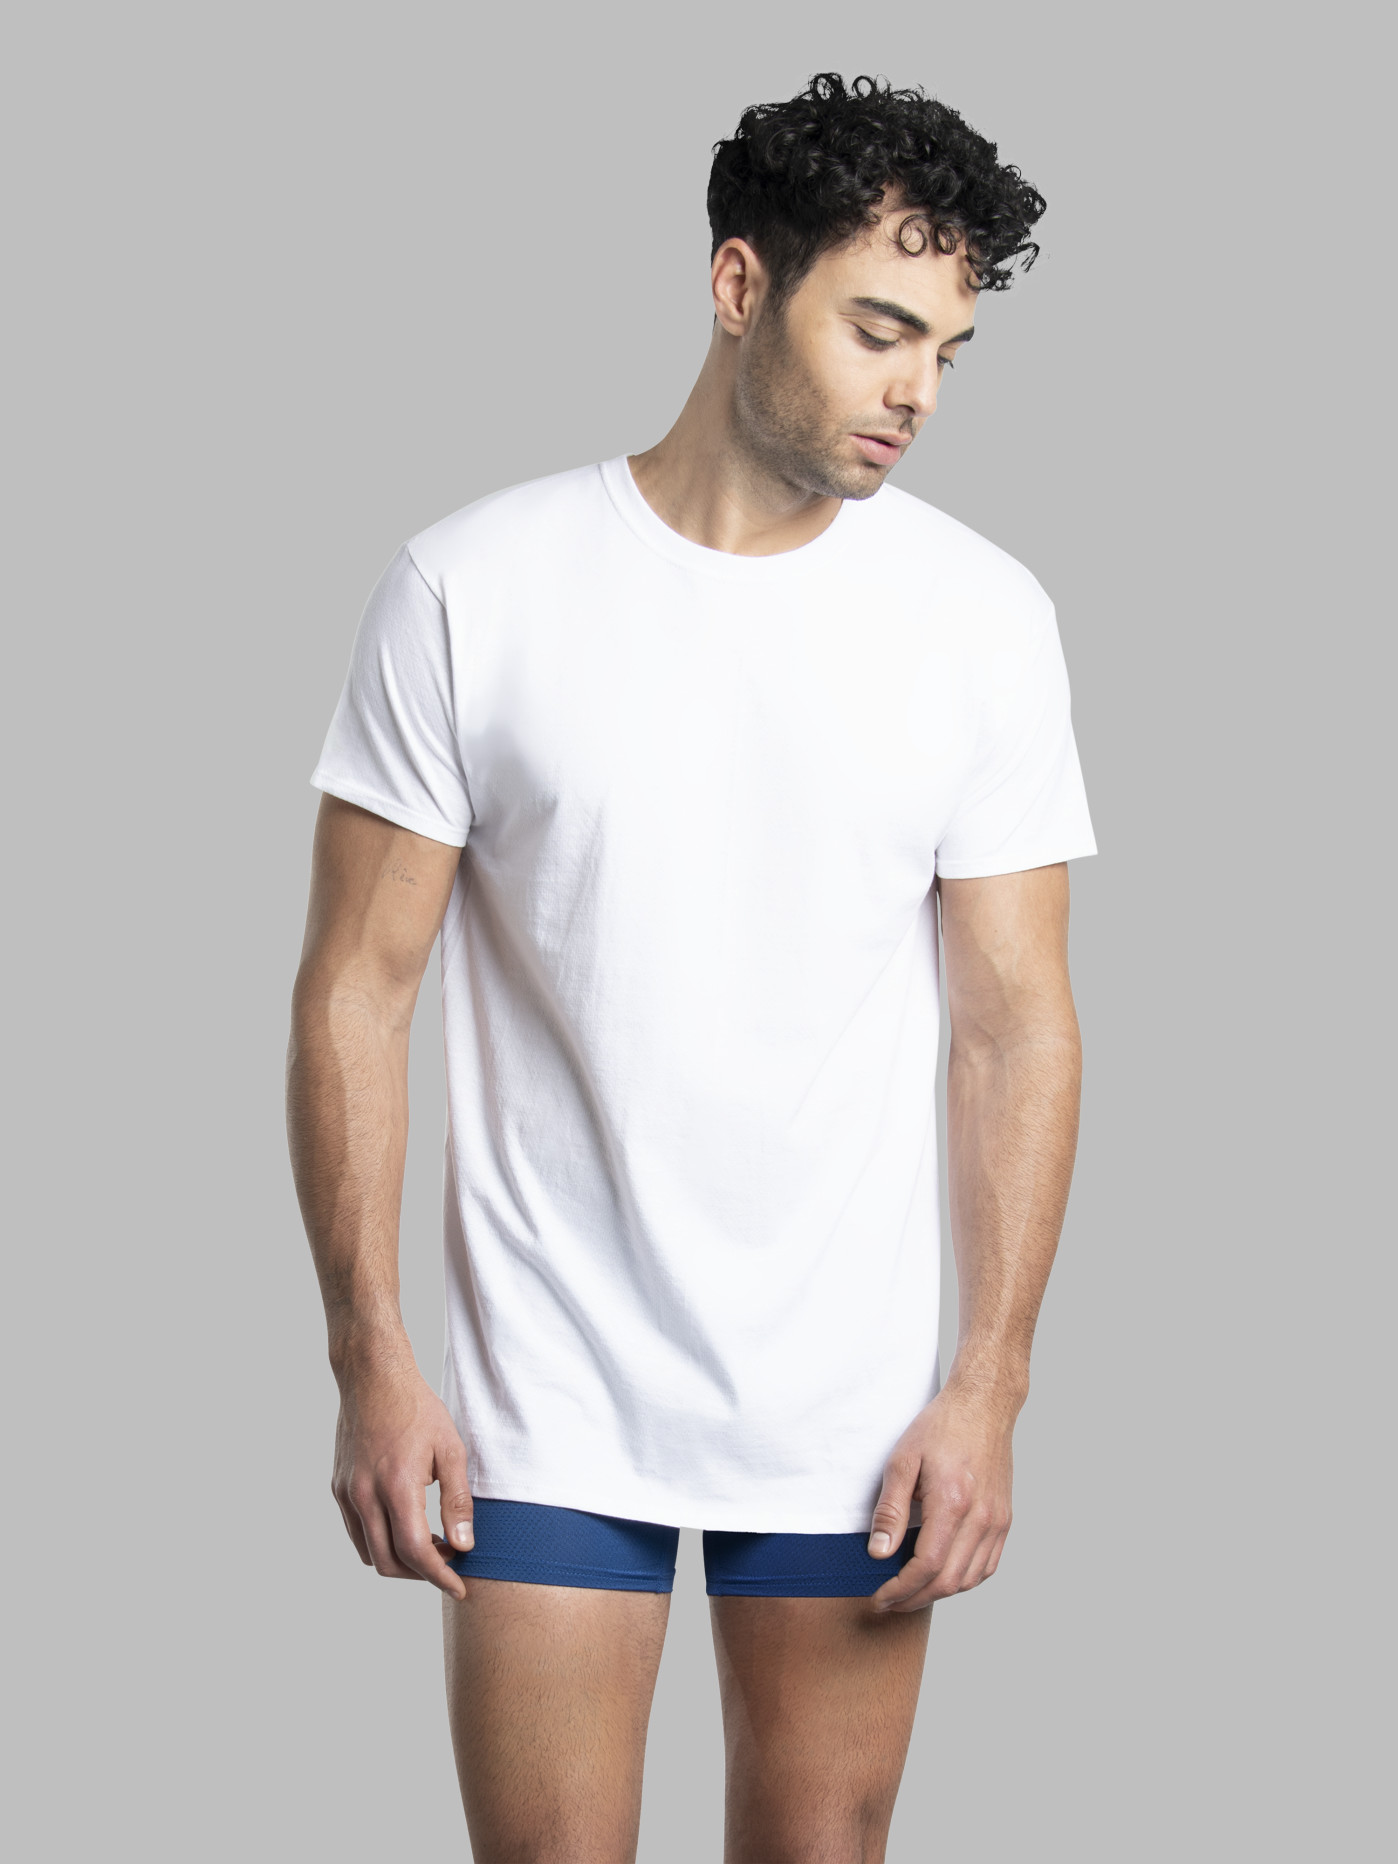 Men's Breathable Cooling Cotton White Crew Neck T-Shirts